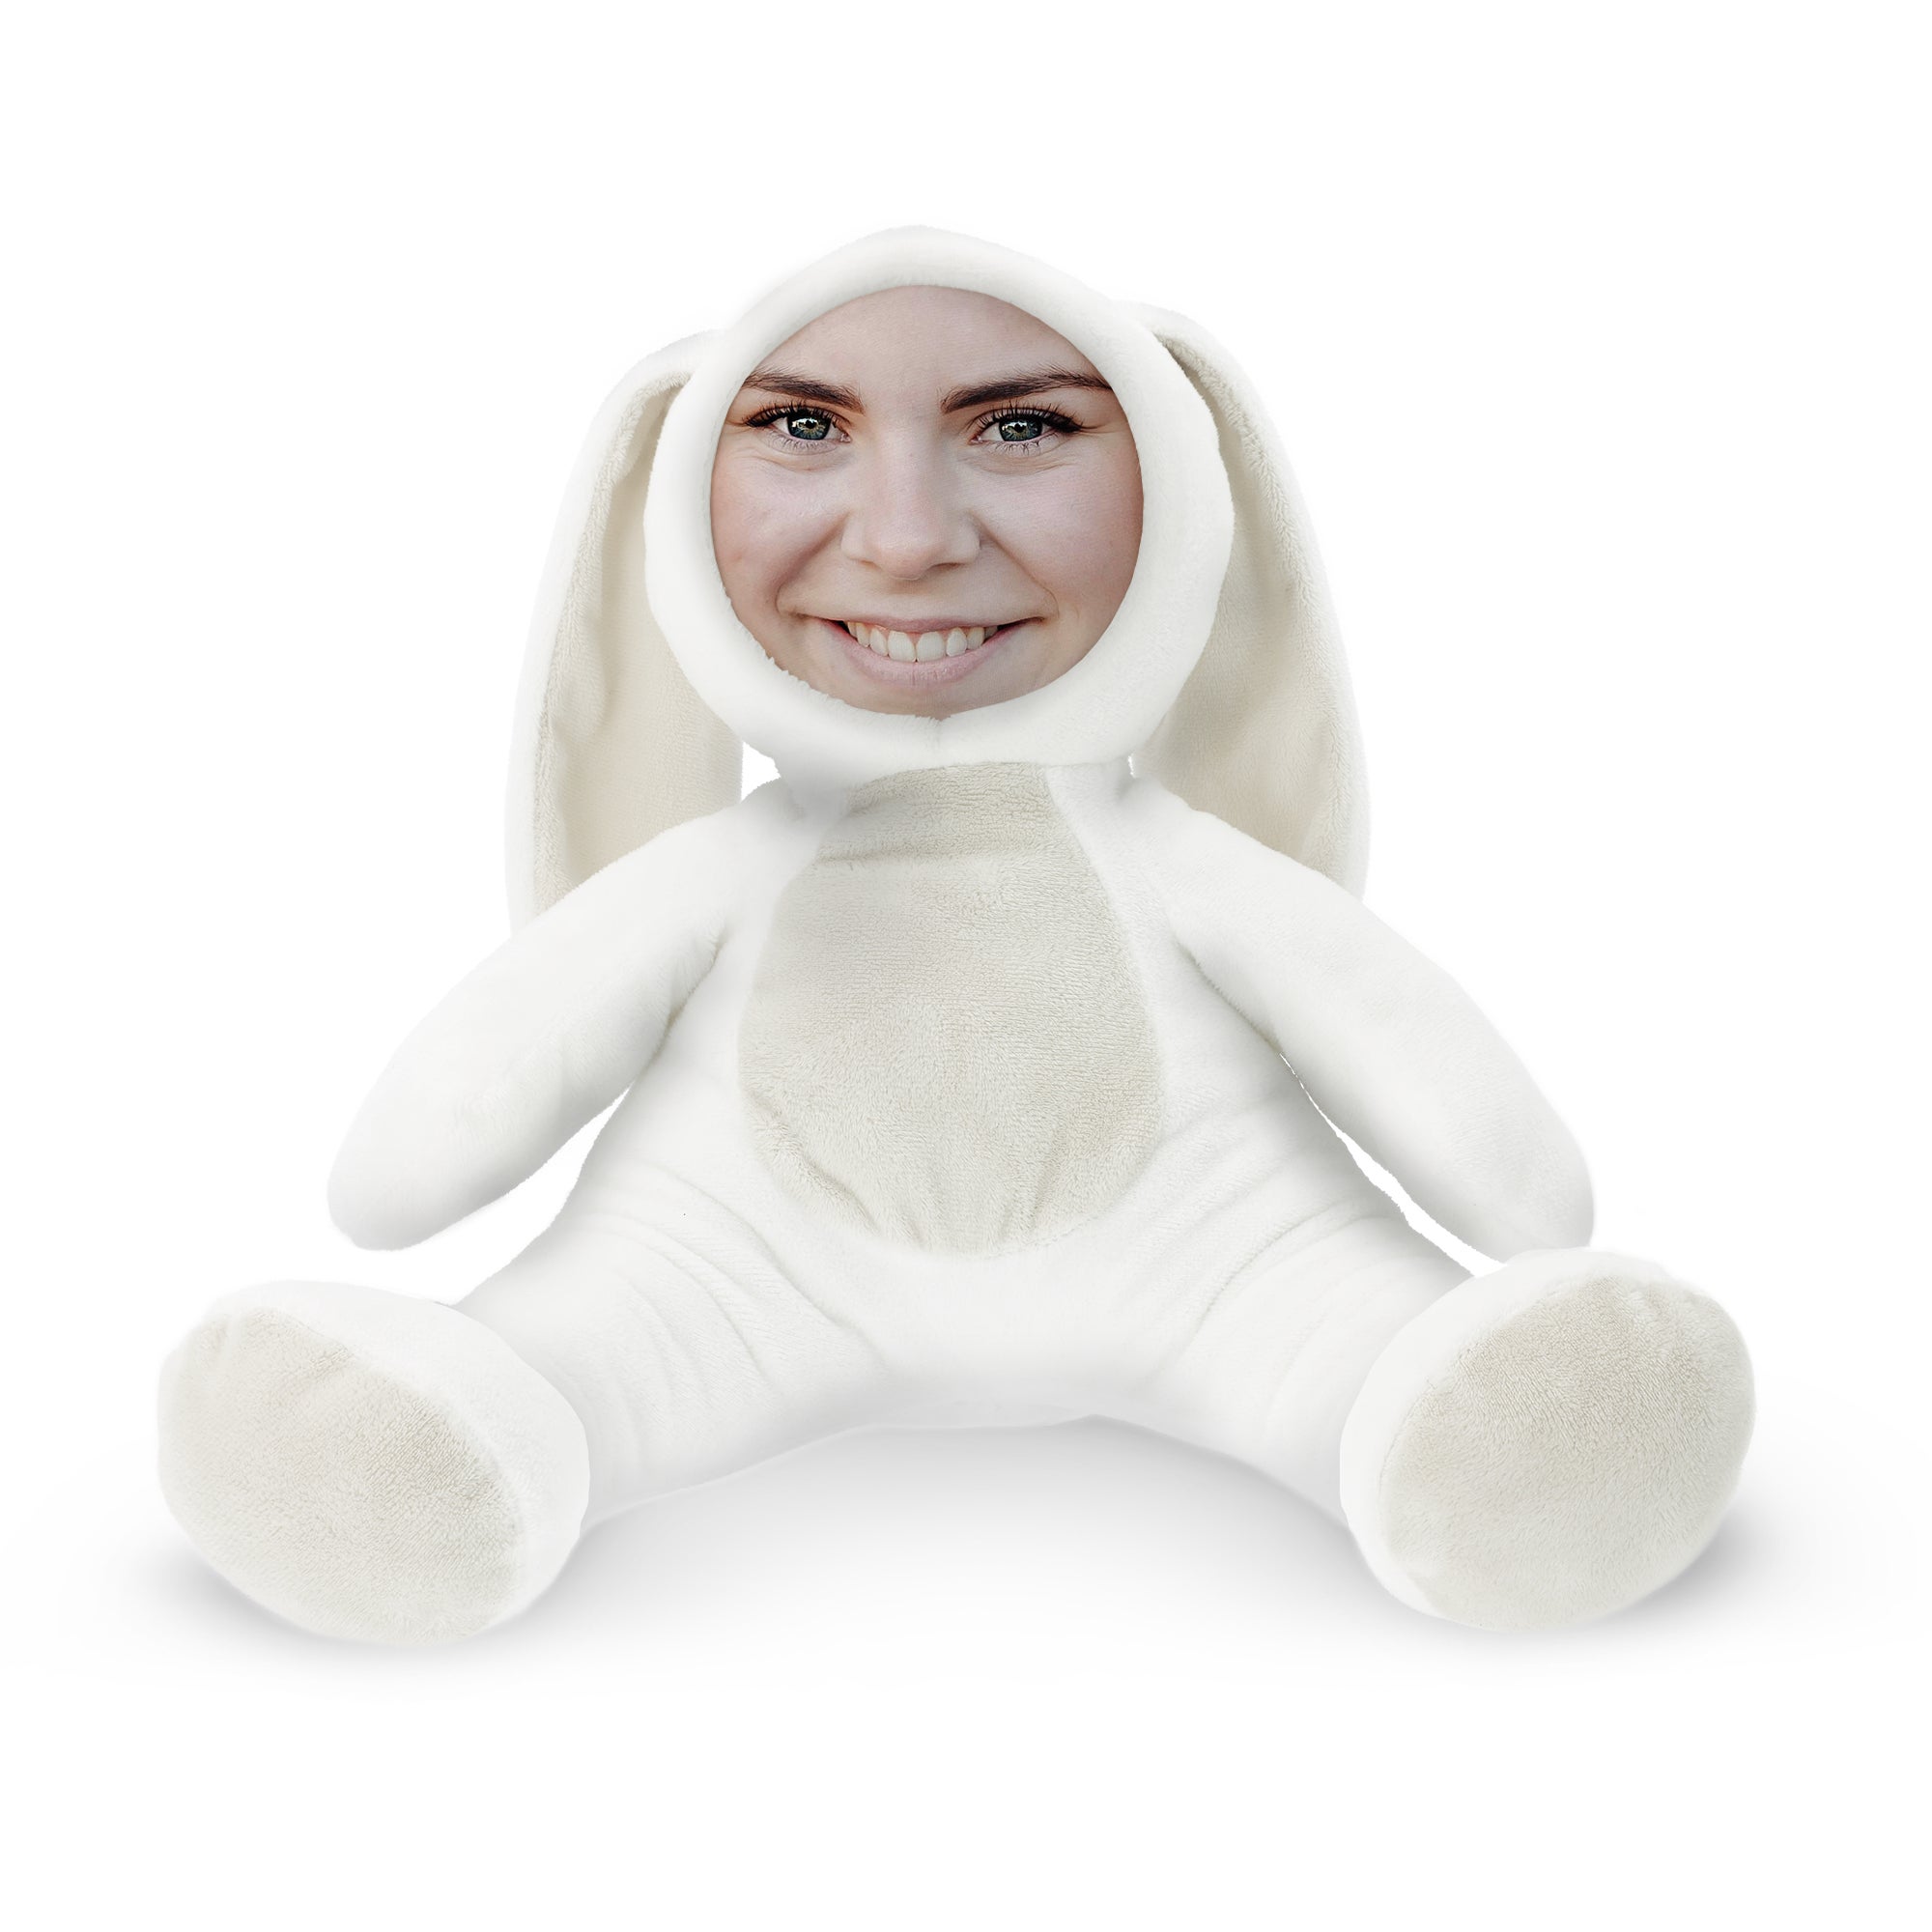 Personalised ItsieMe plush - Bunny - XL